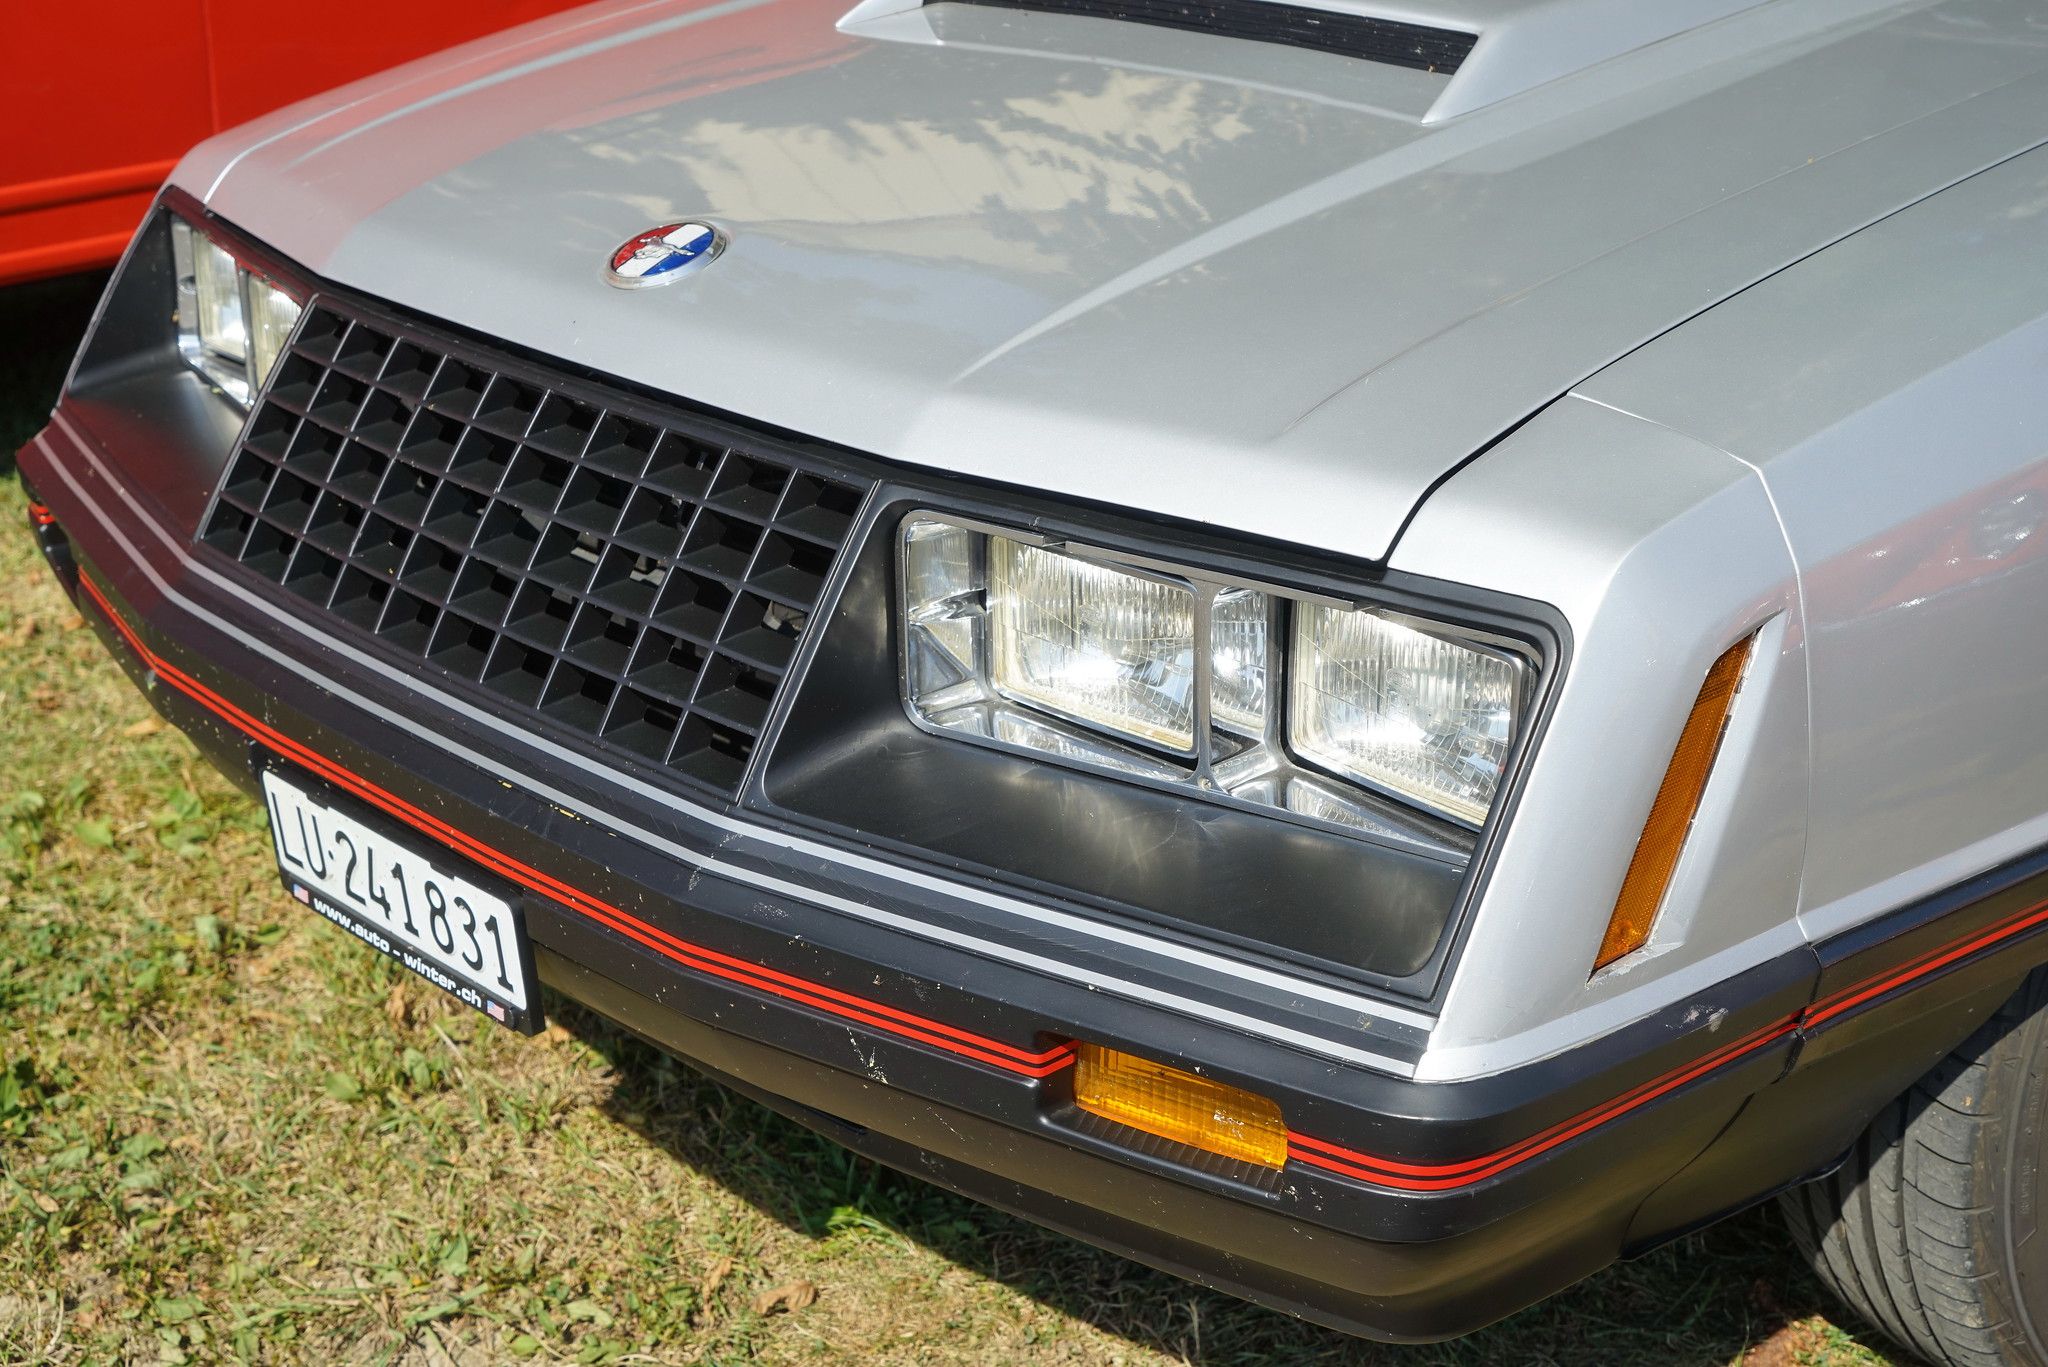 parrilla delantera del Ford Mustang 5.0 de 1979 